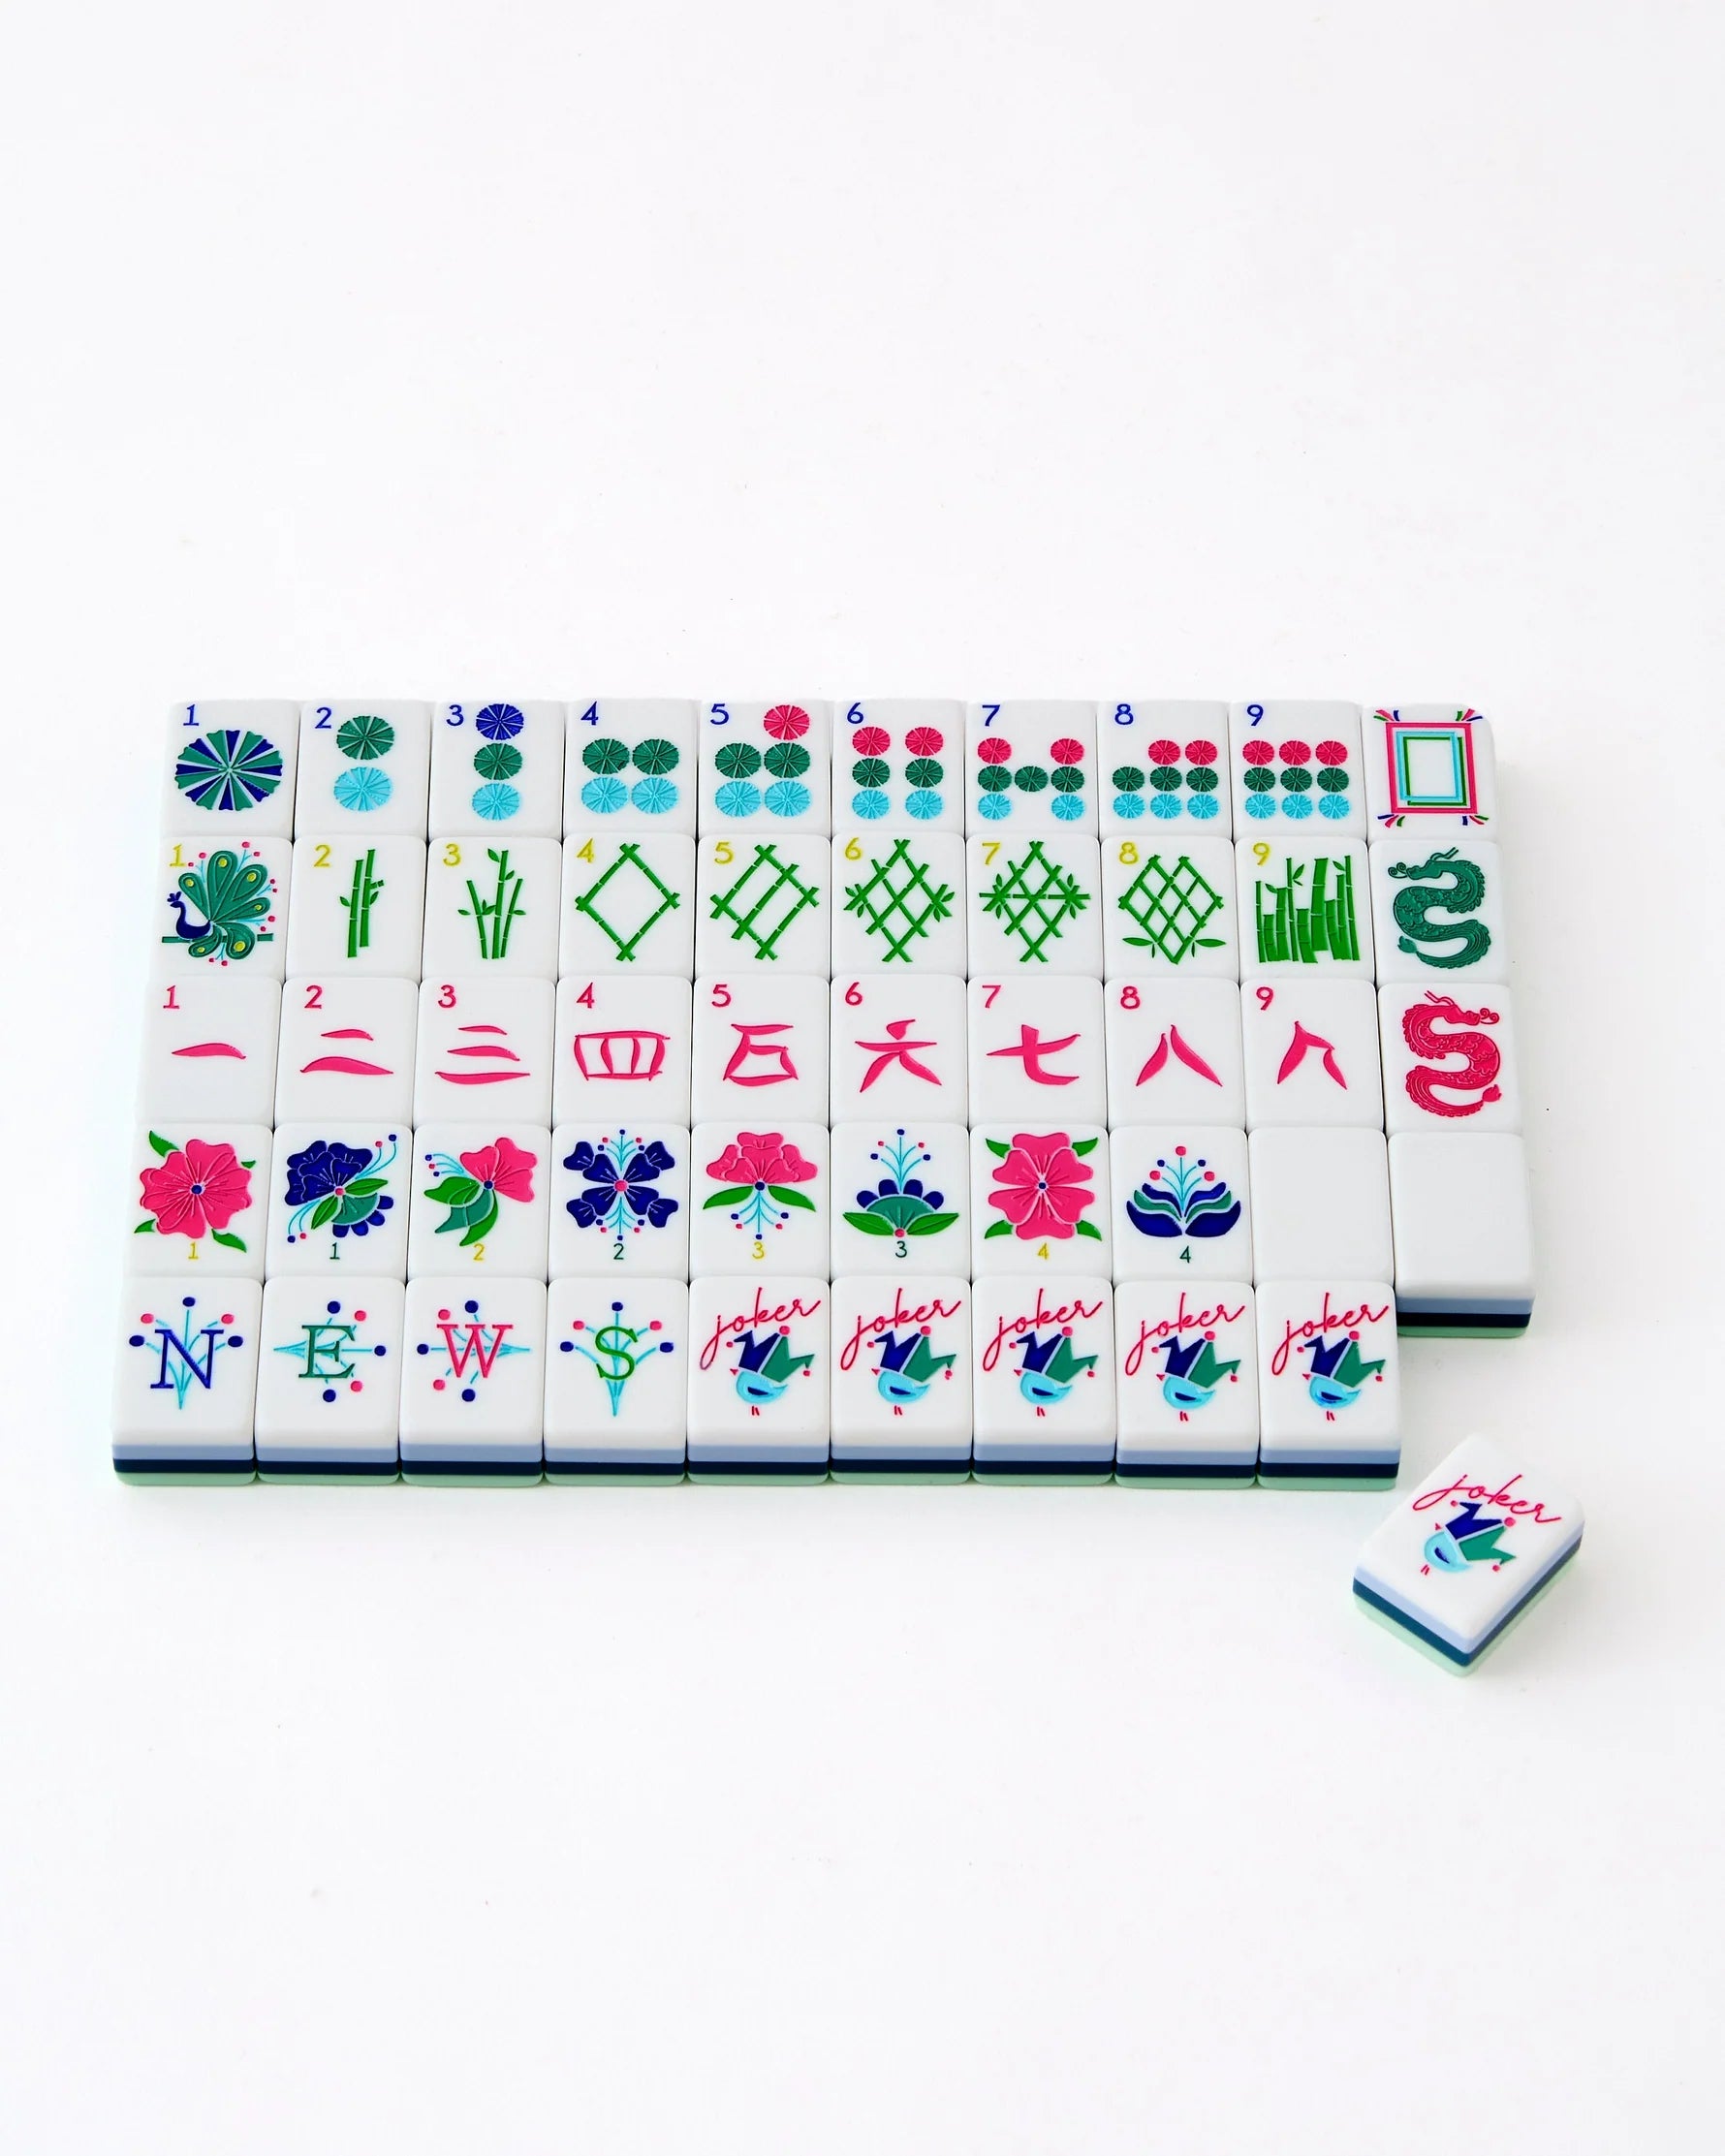 birdie oh my mahjong tile set designer